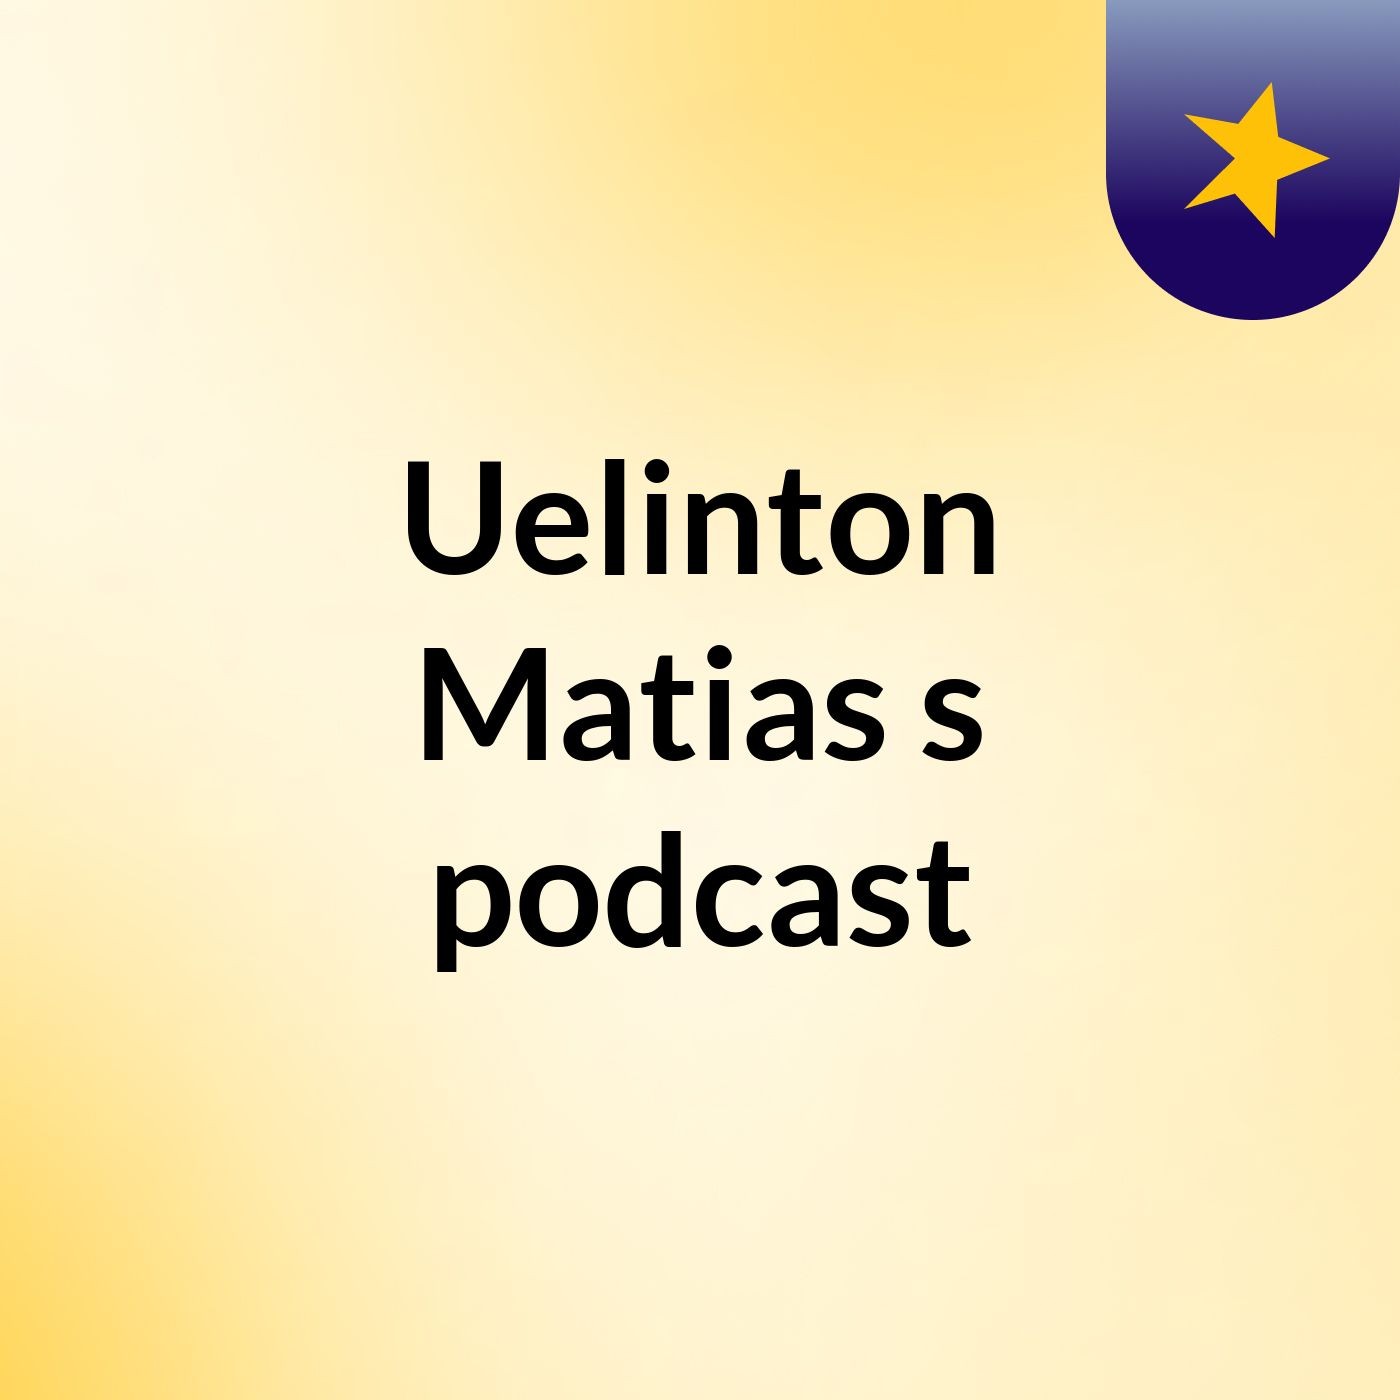 Uelinton Matias's podcast